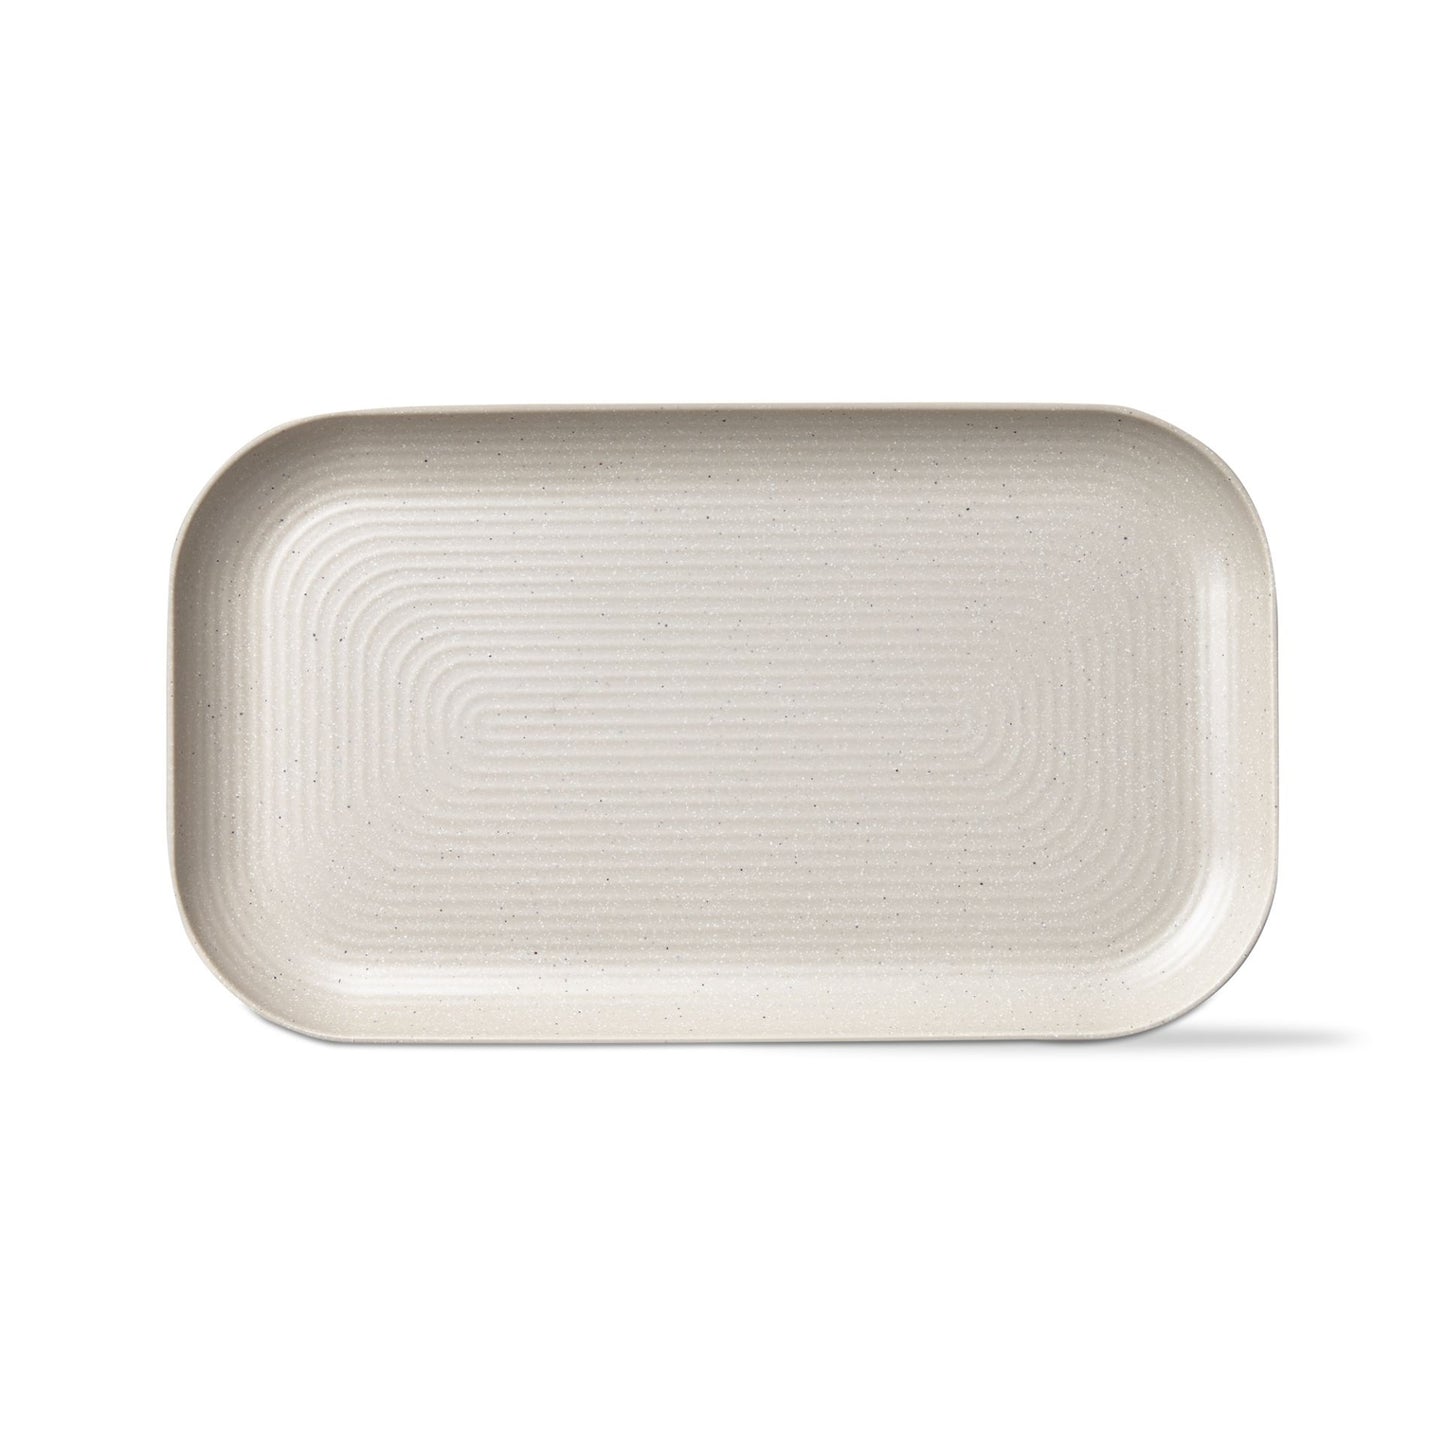 cream Brooklyn Melamine Platter on a white background.